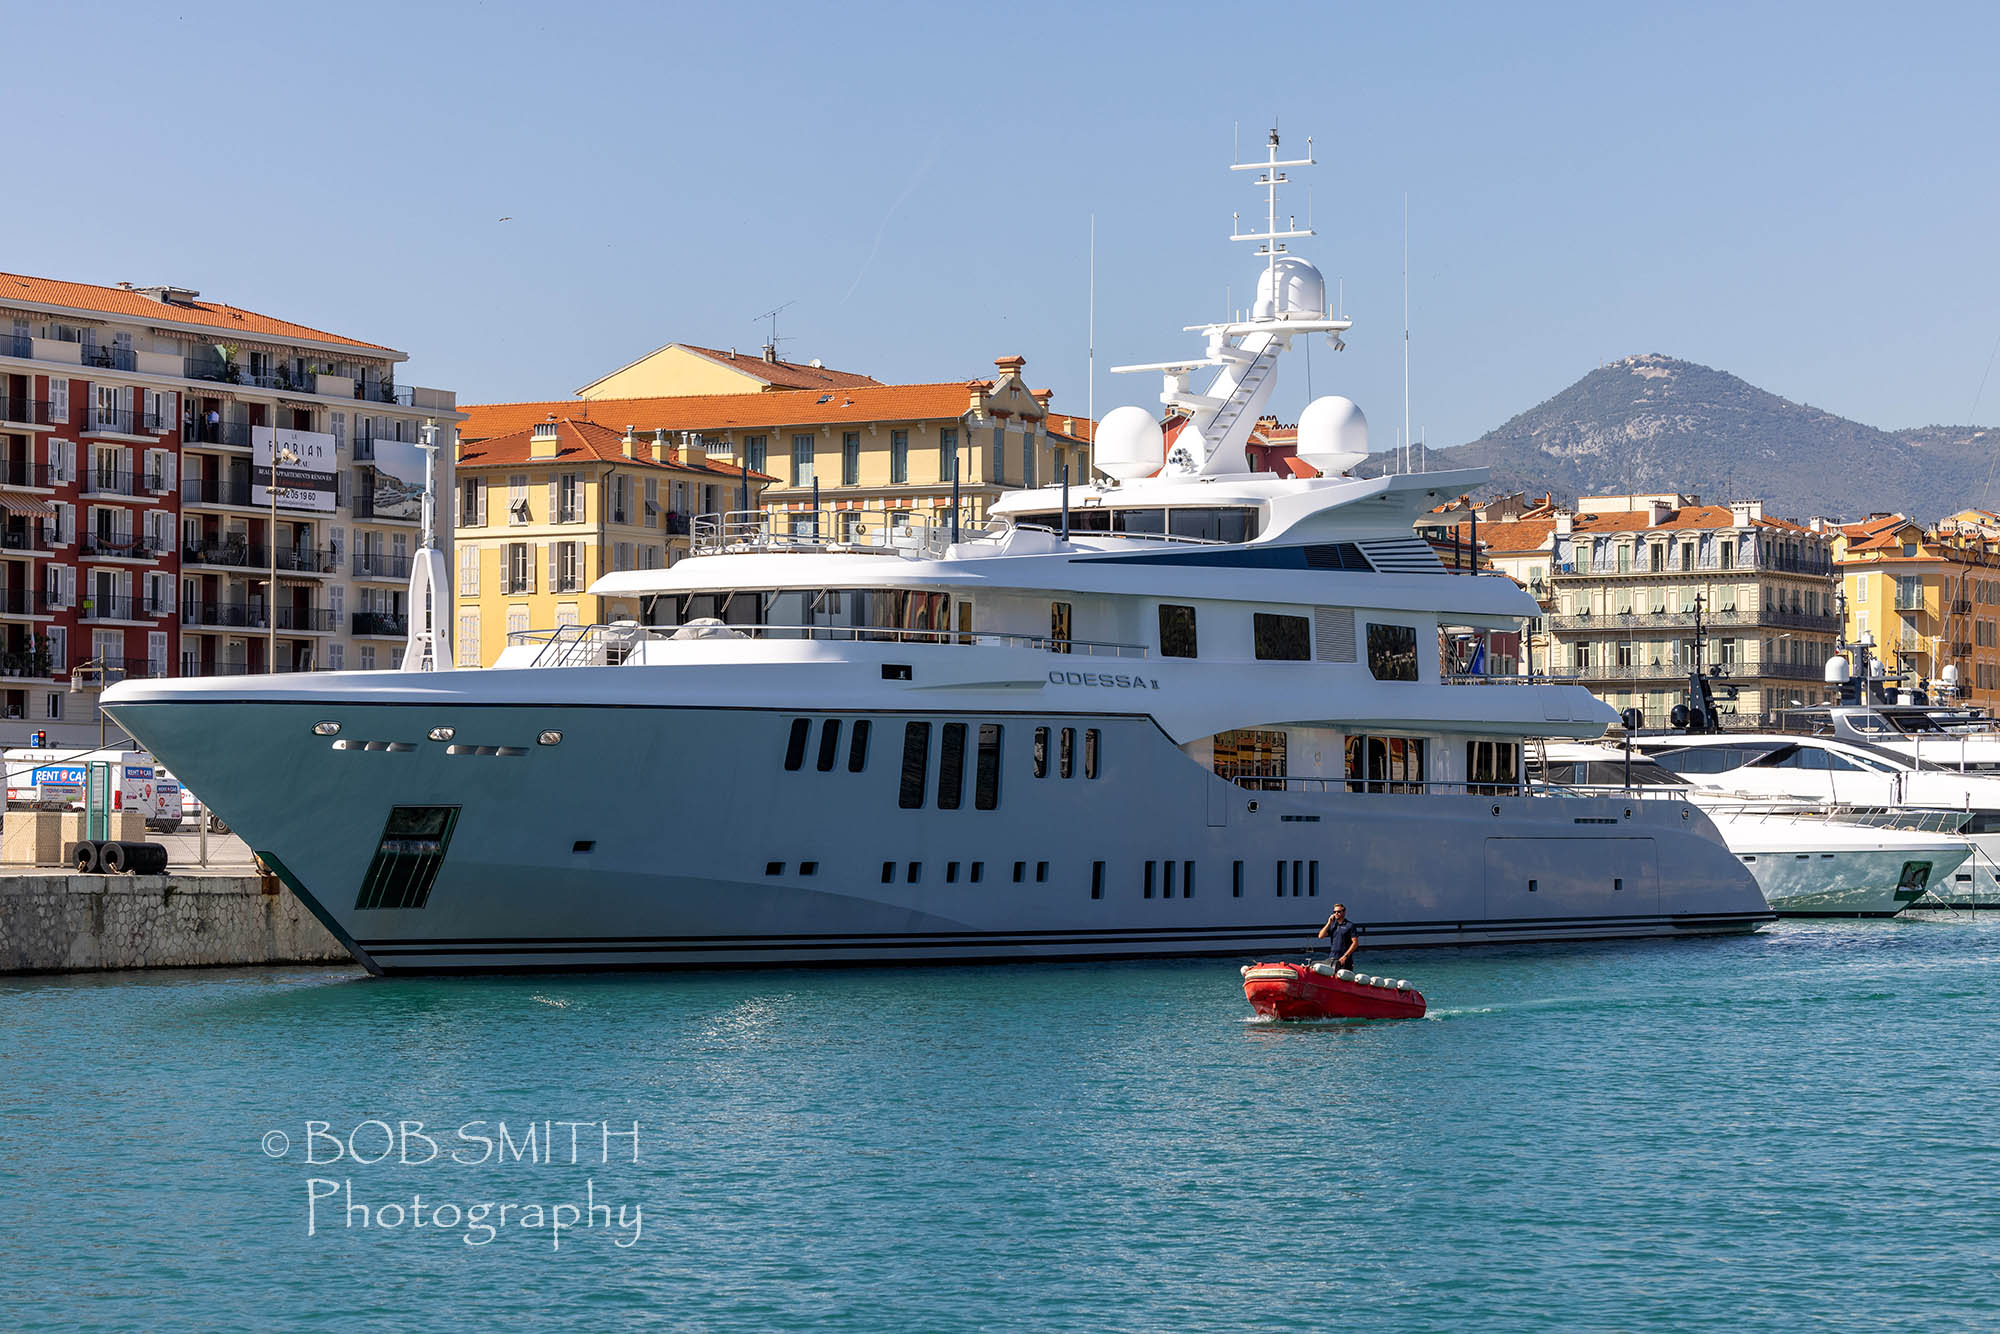 The yacht Odessa II is owned by Ukrainian-born multi-billionaire Len Blavatnik, and is valued at $80m